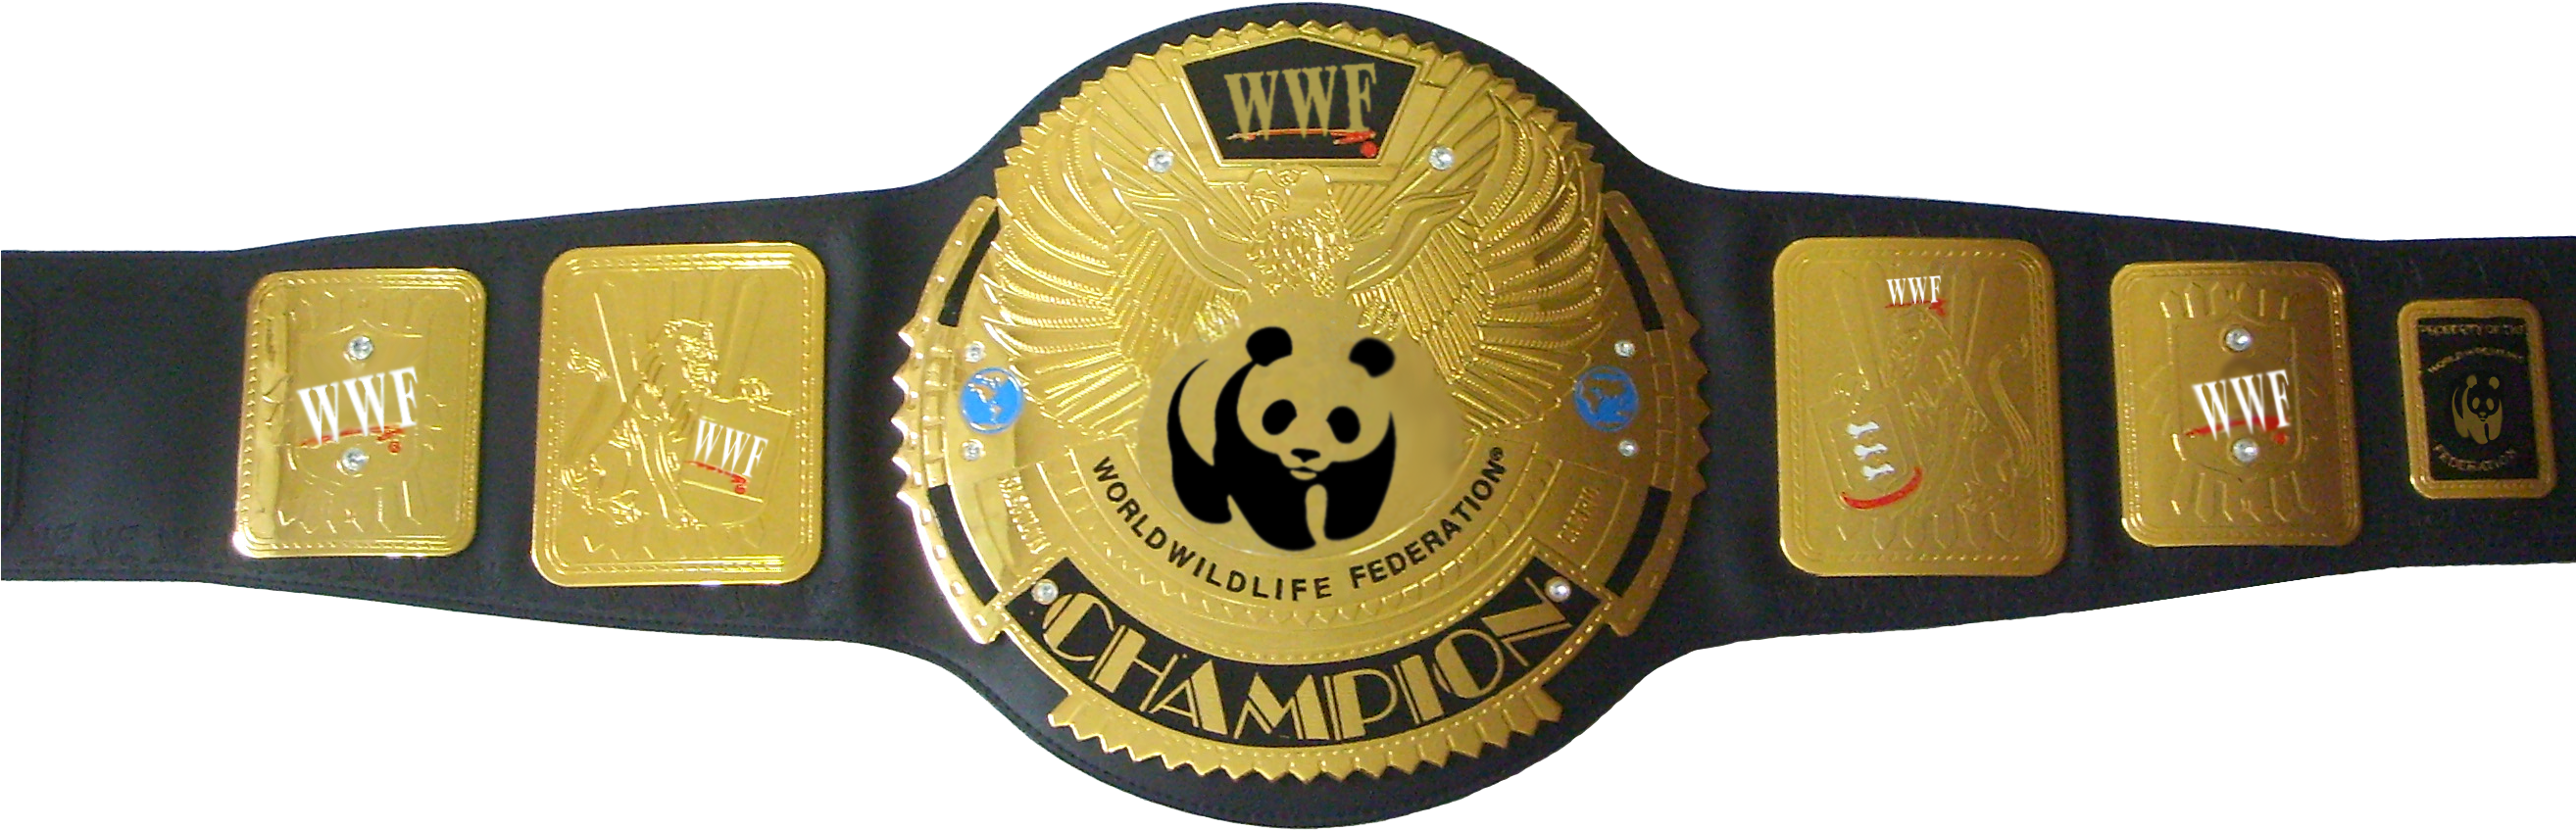 World Wildlife Federation Championship Belt PNG